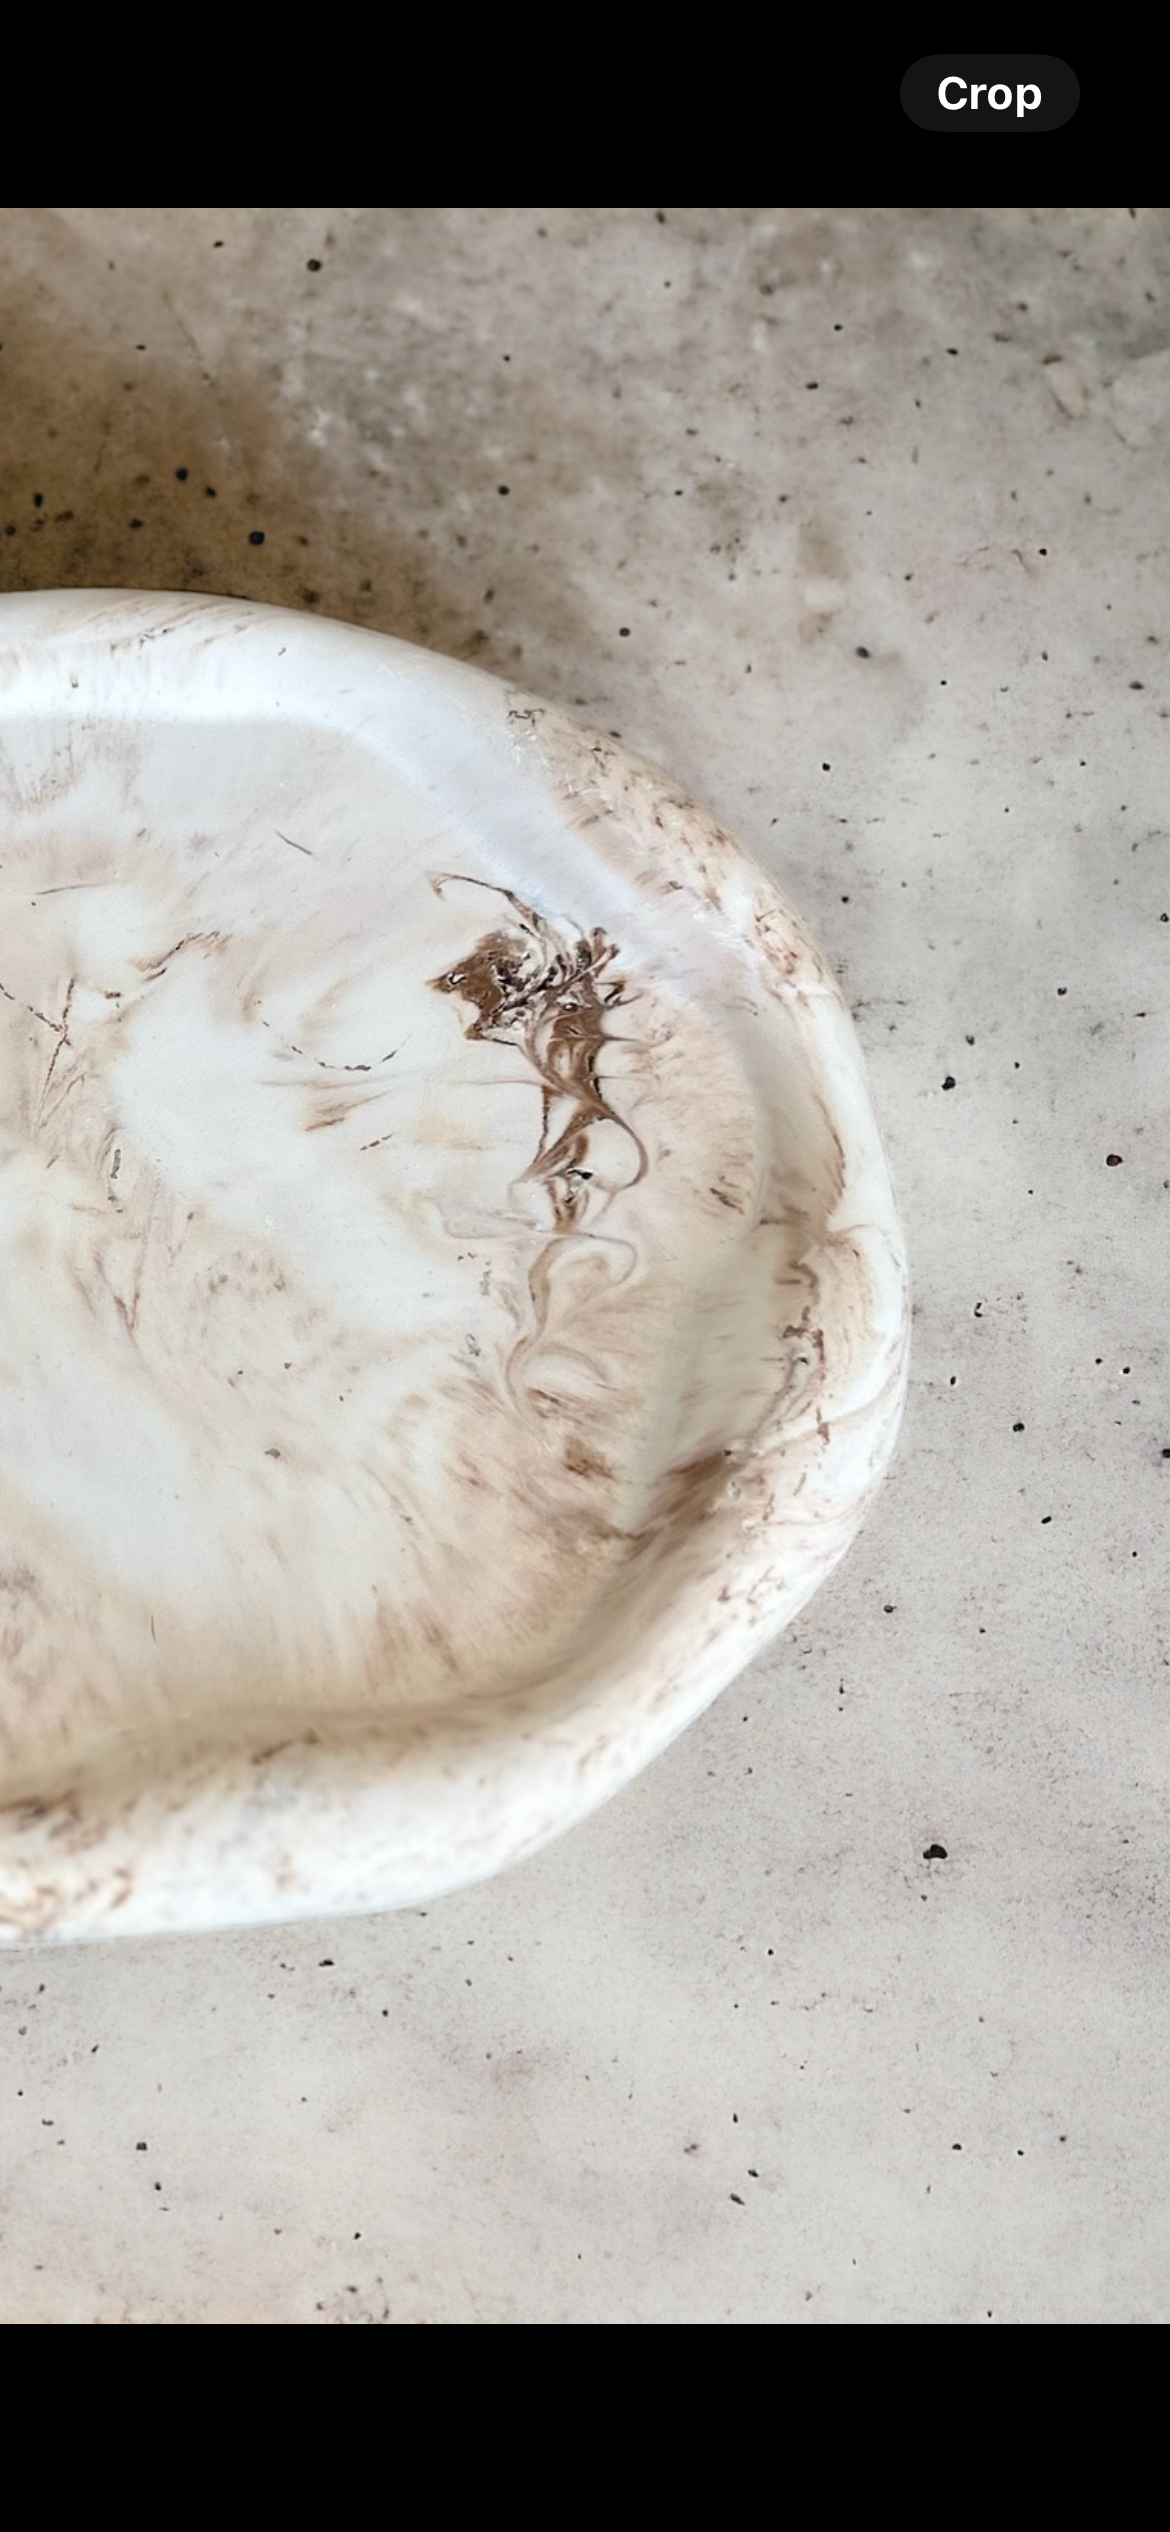 Irregular Cloud & Oval ceramic gypsum Tray